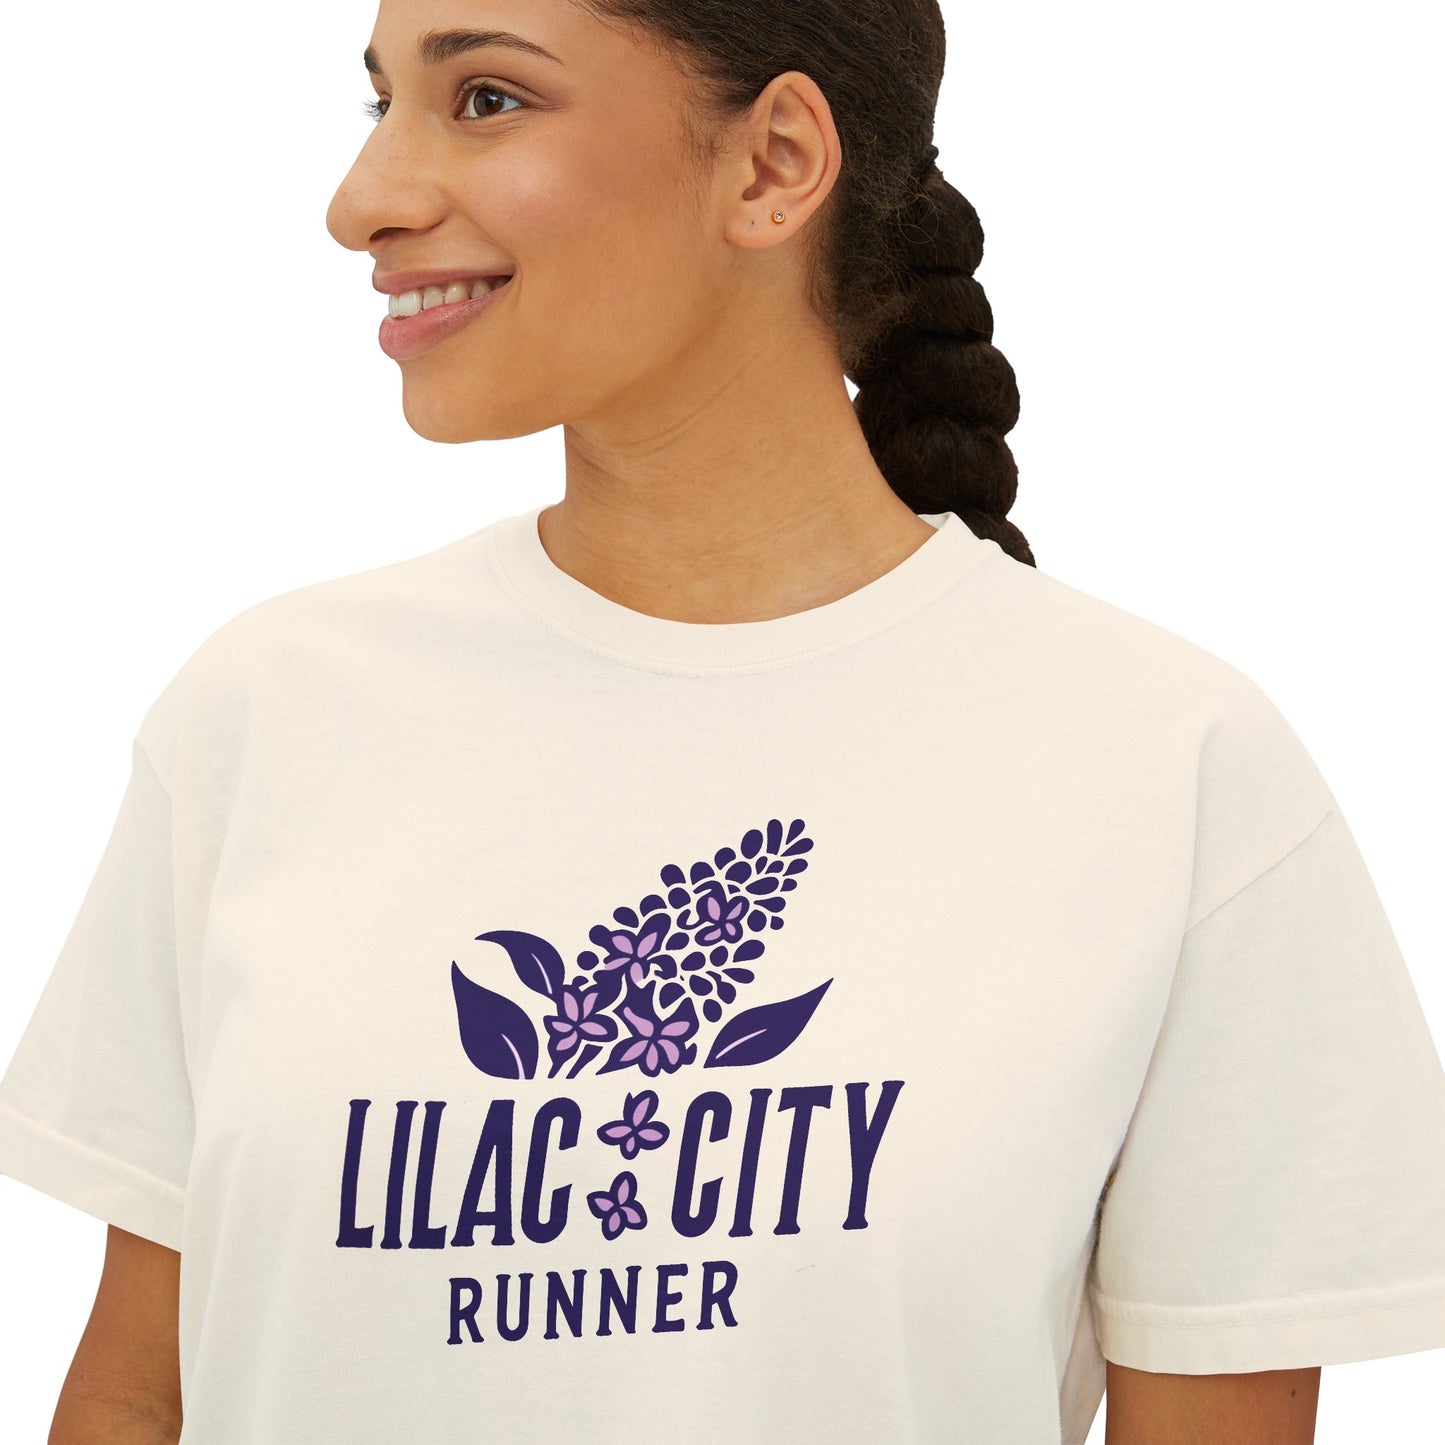 Lilac City Runner Boxy Crop Tee